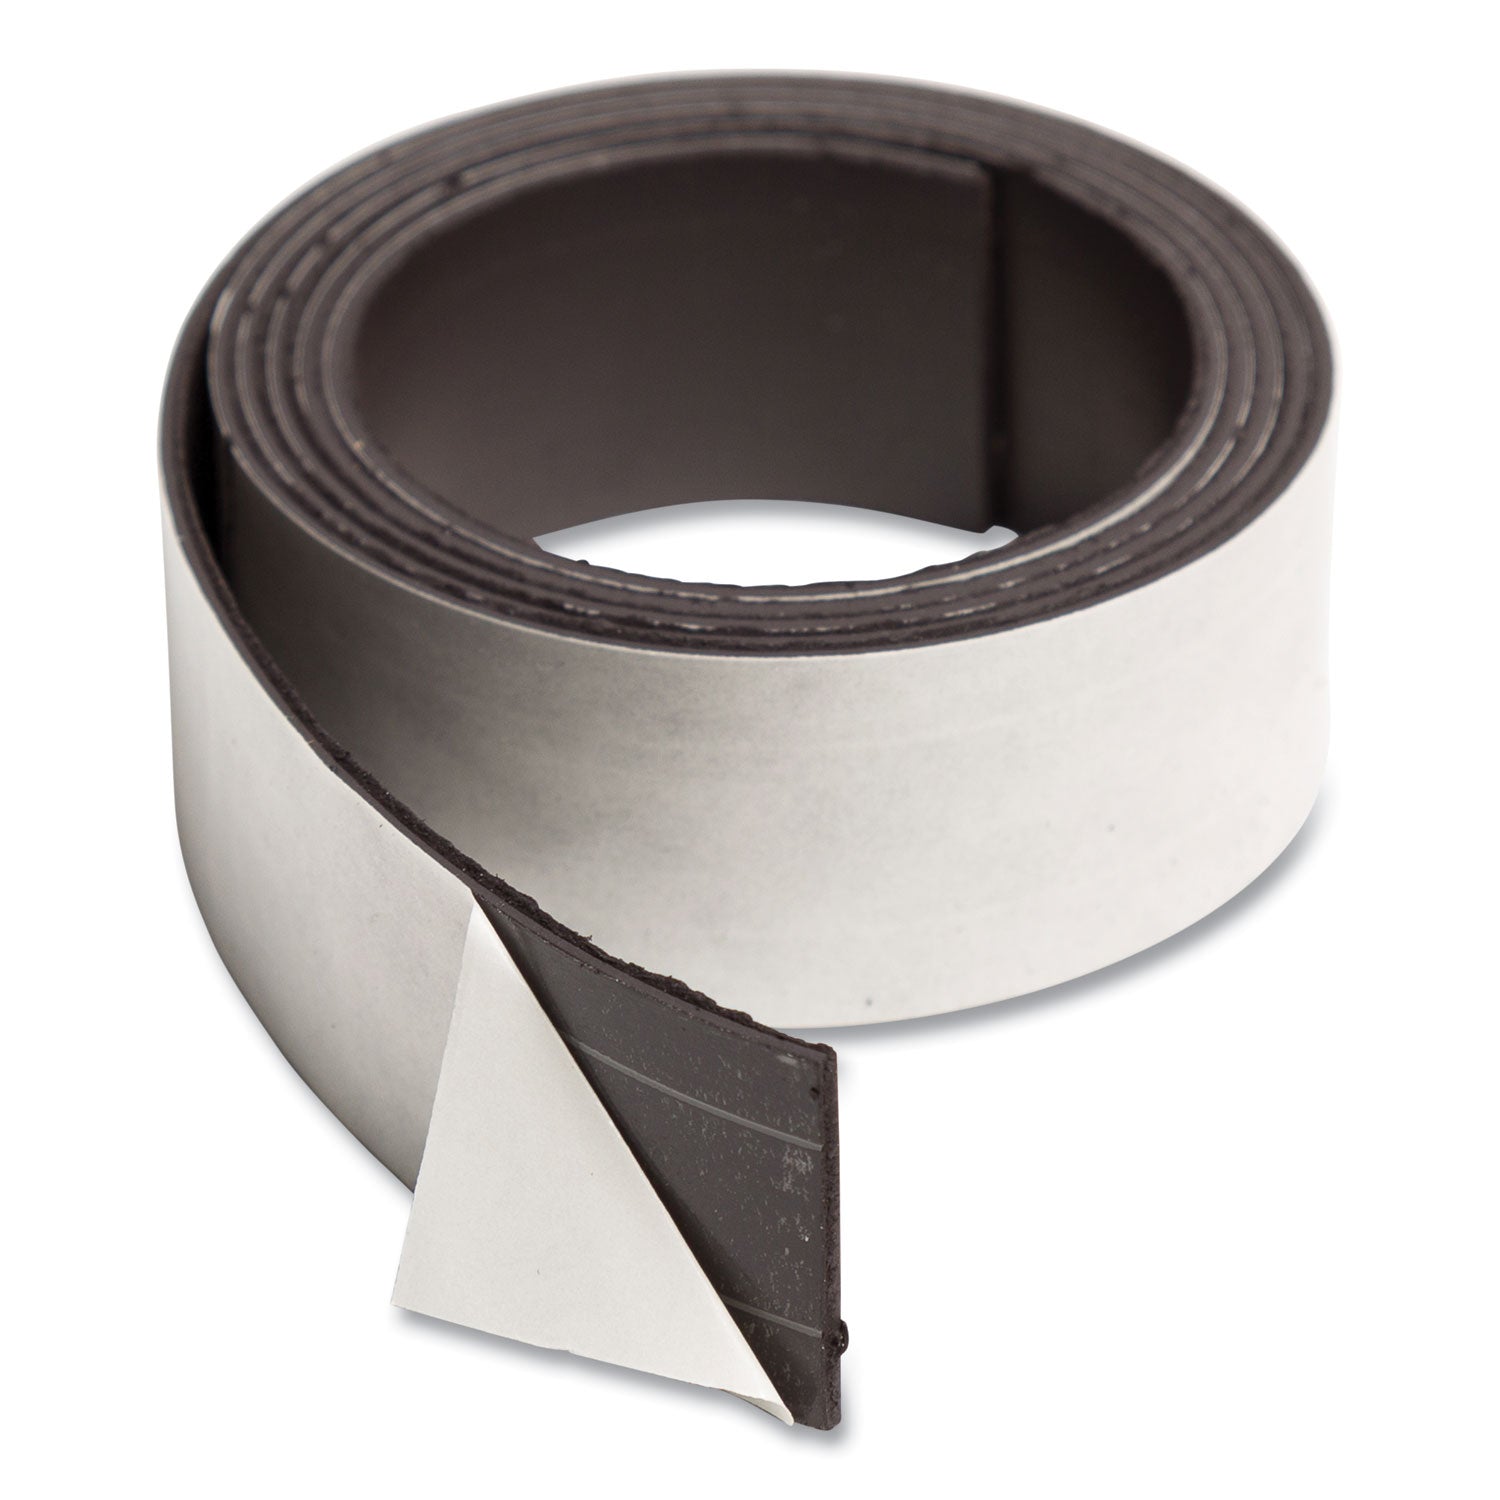 magnetic-adhesive-tape-roll-1-x-4-ft-black_ubrfm2020 - 2